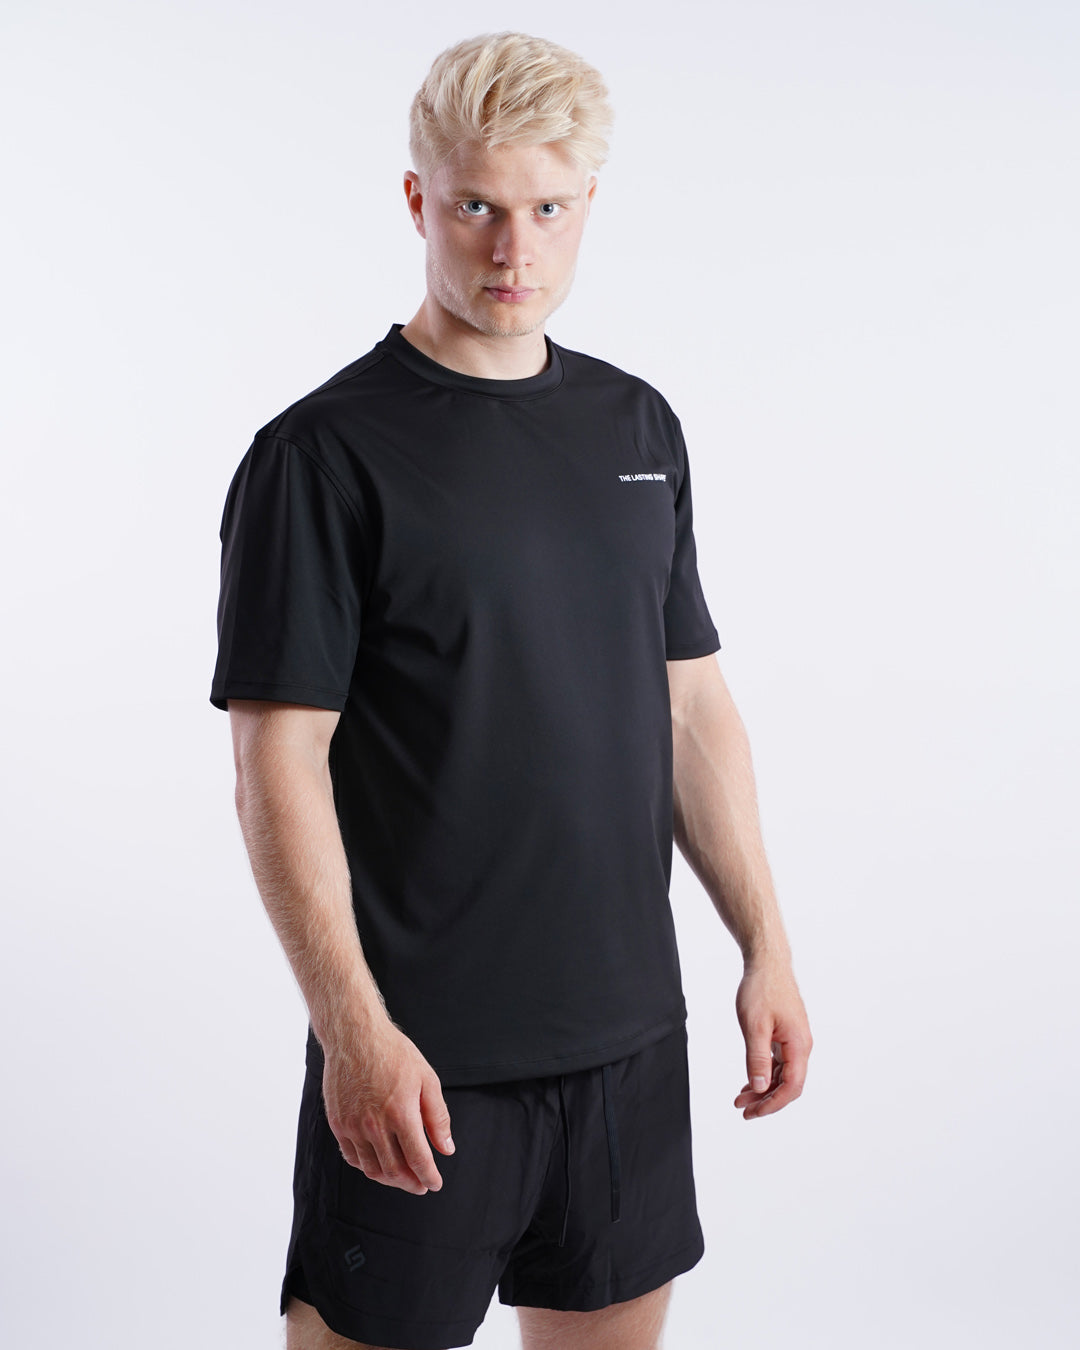 Trek T-shirt - Black